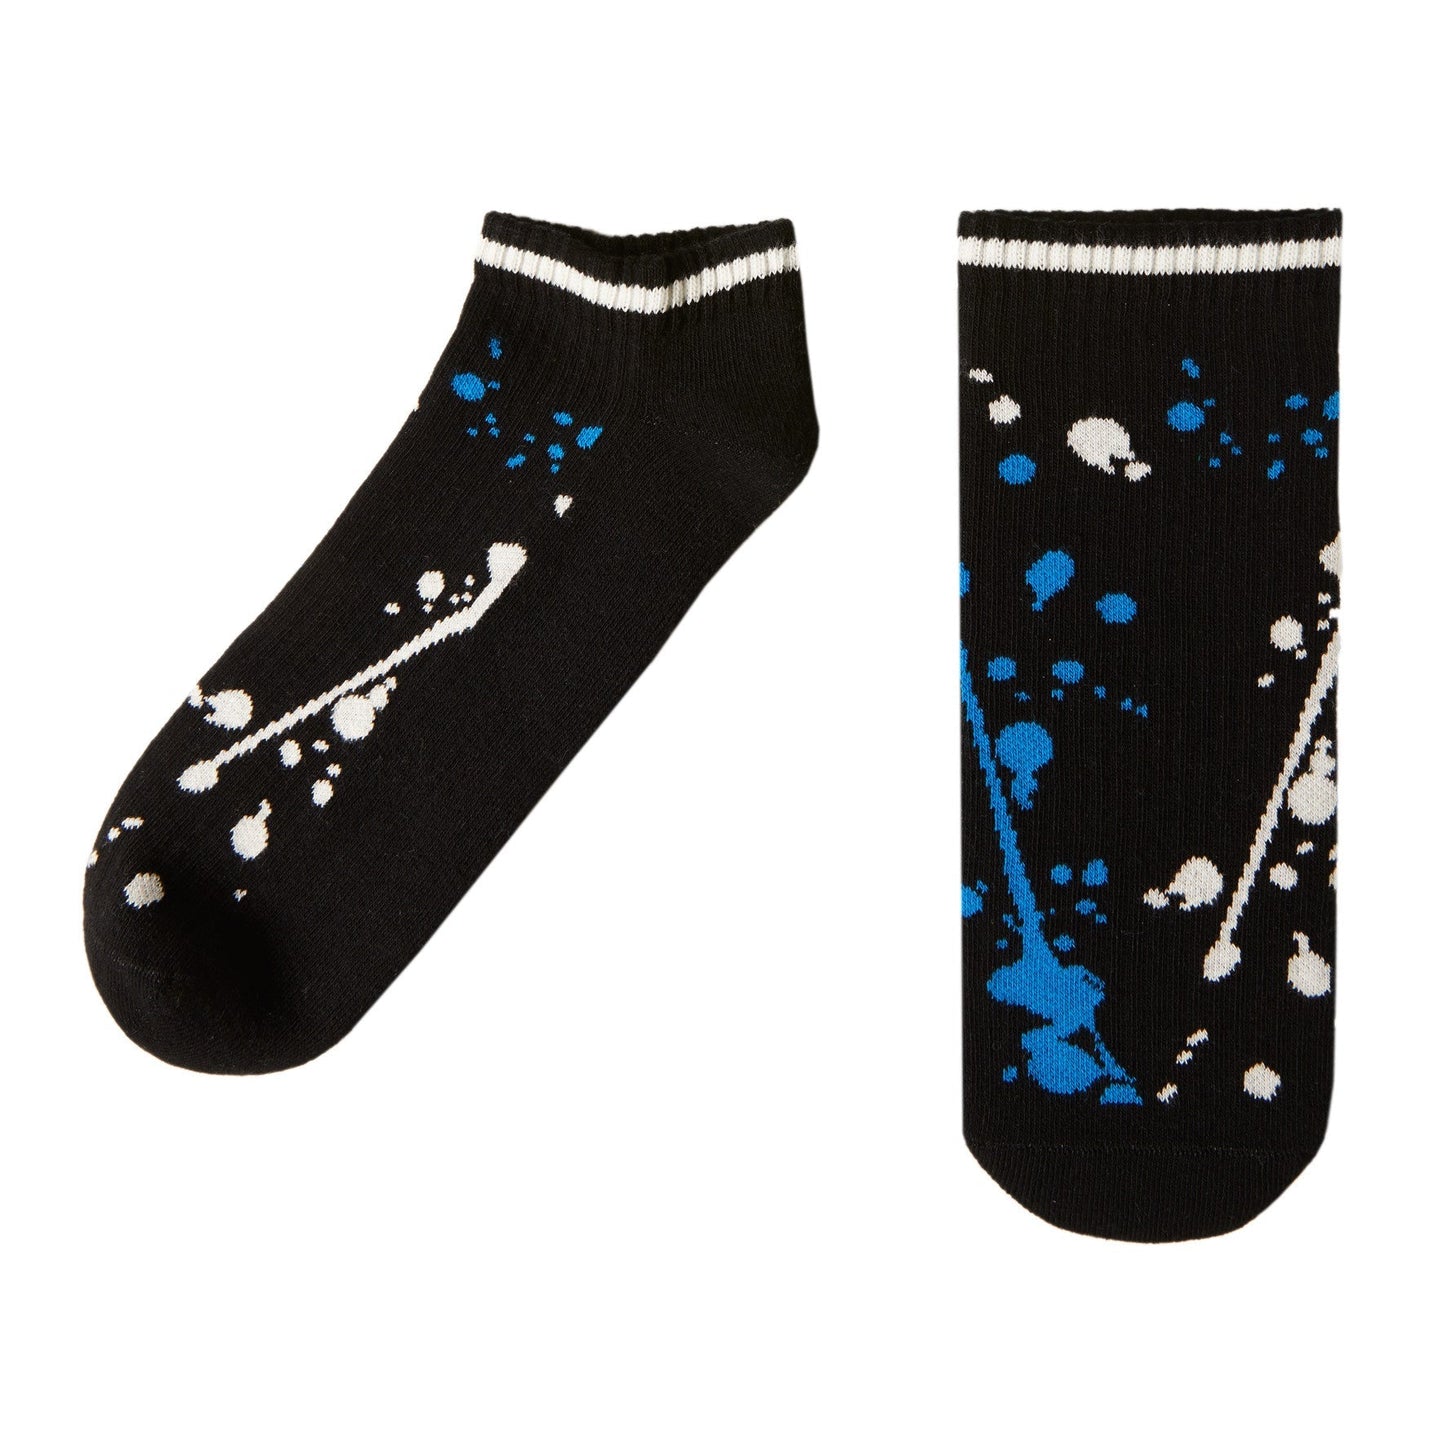 Water Performance Ankle Socks - Black/Blue